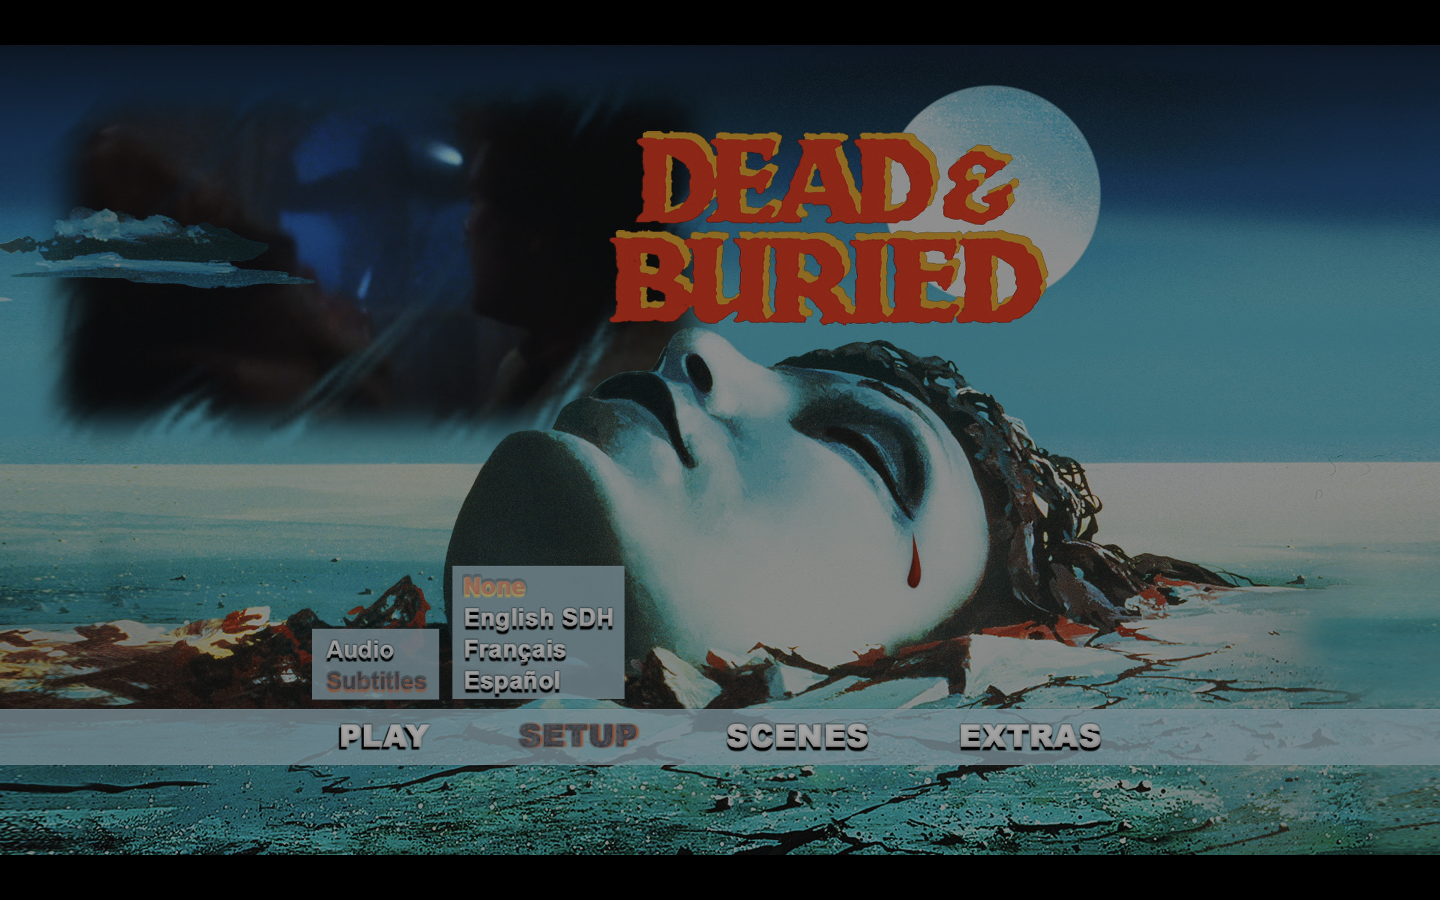 Dead & Buried 4K UHD subtitles menu